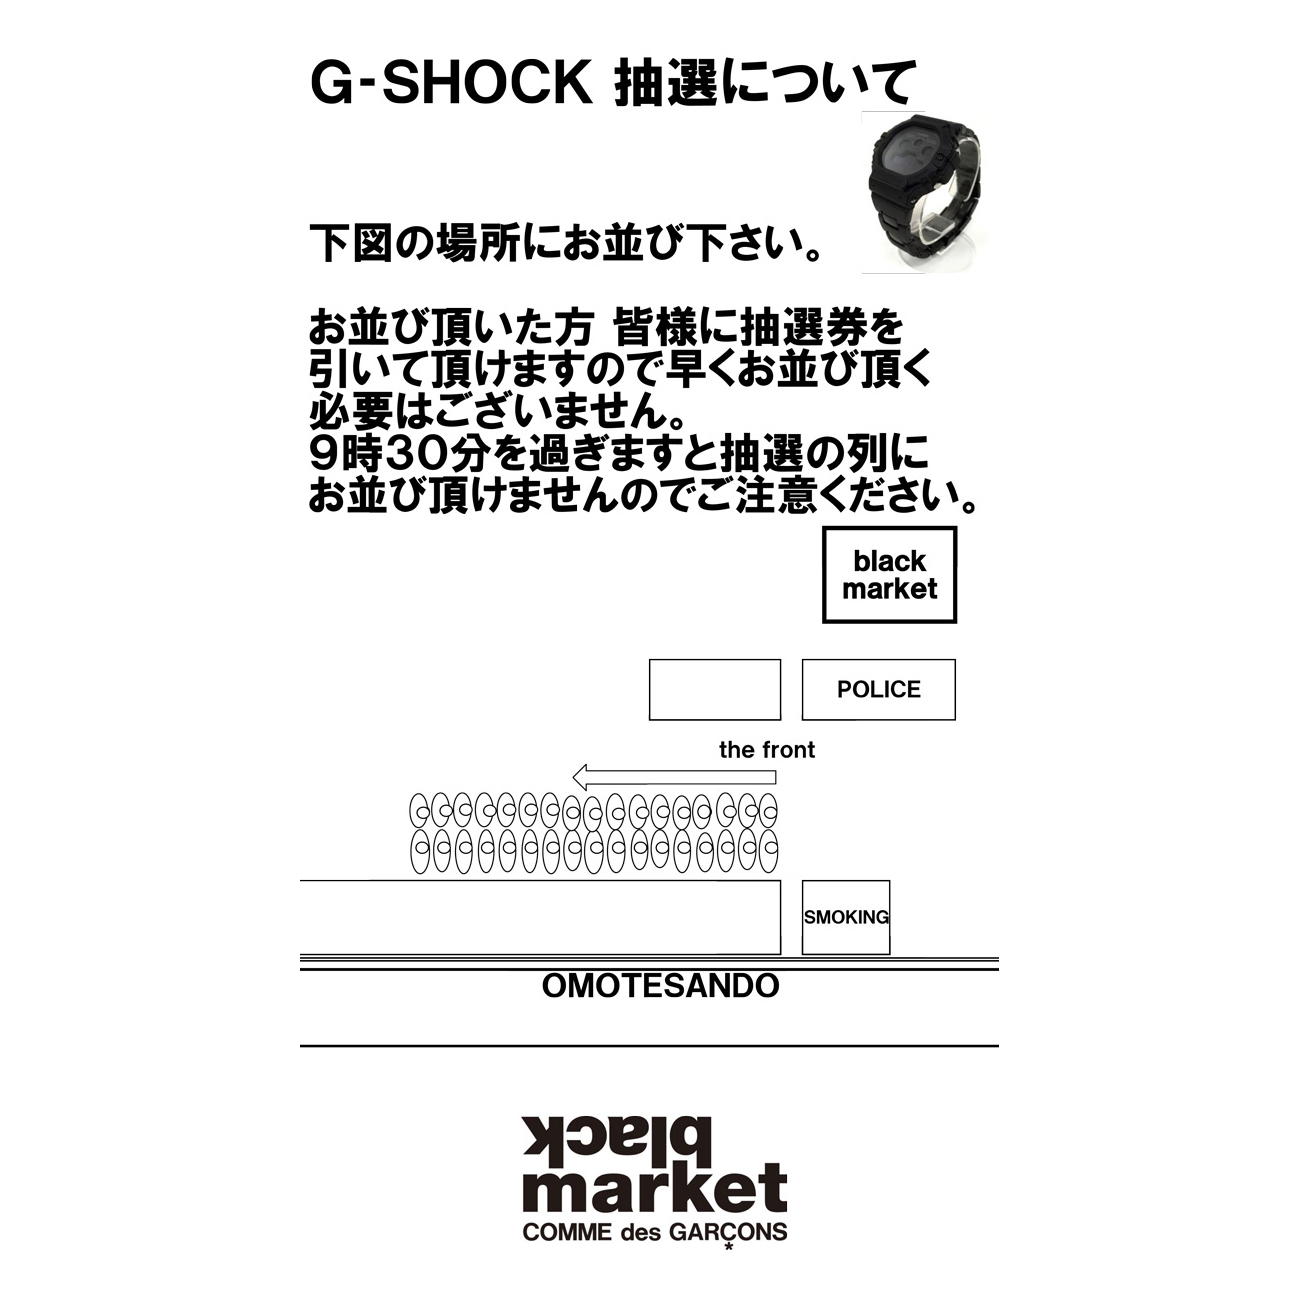 black market CdG：Special G-SHOCK 販売方法｜コムデギャルソン店舗マップ